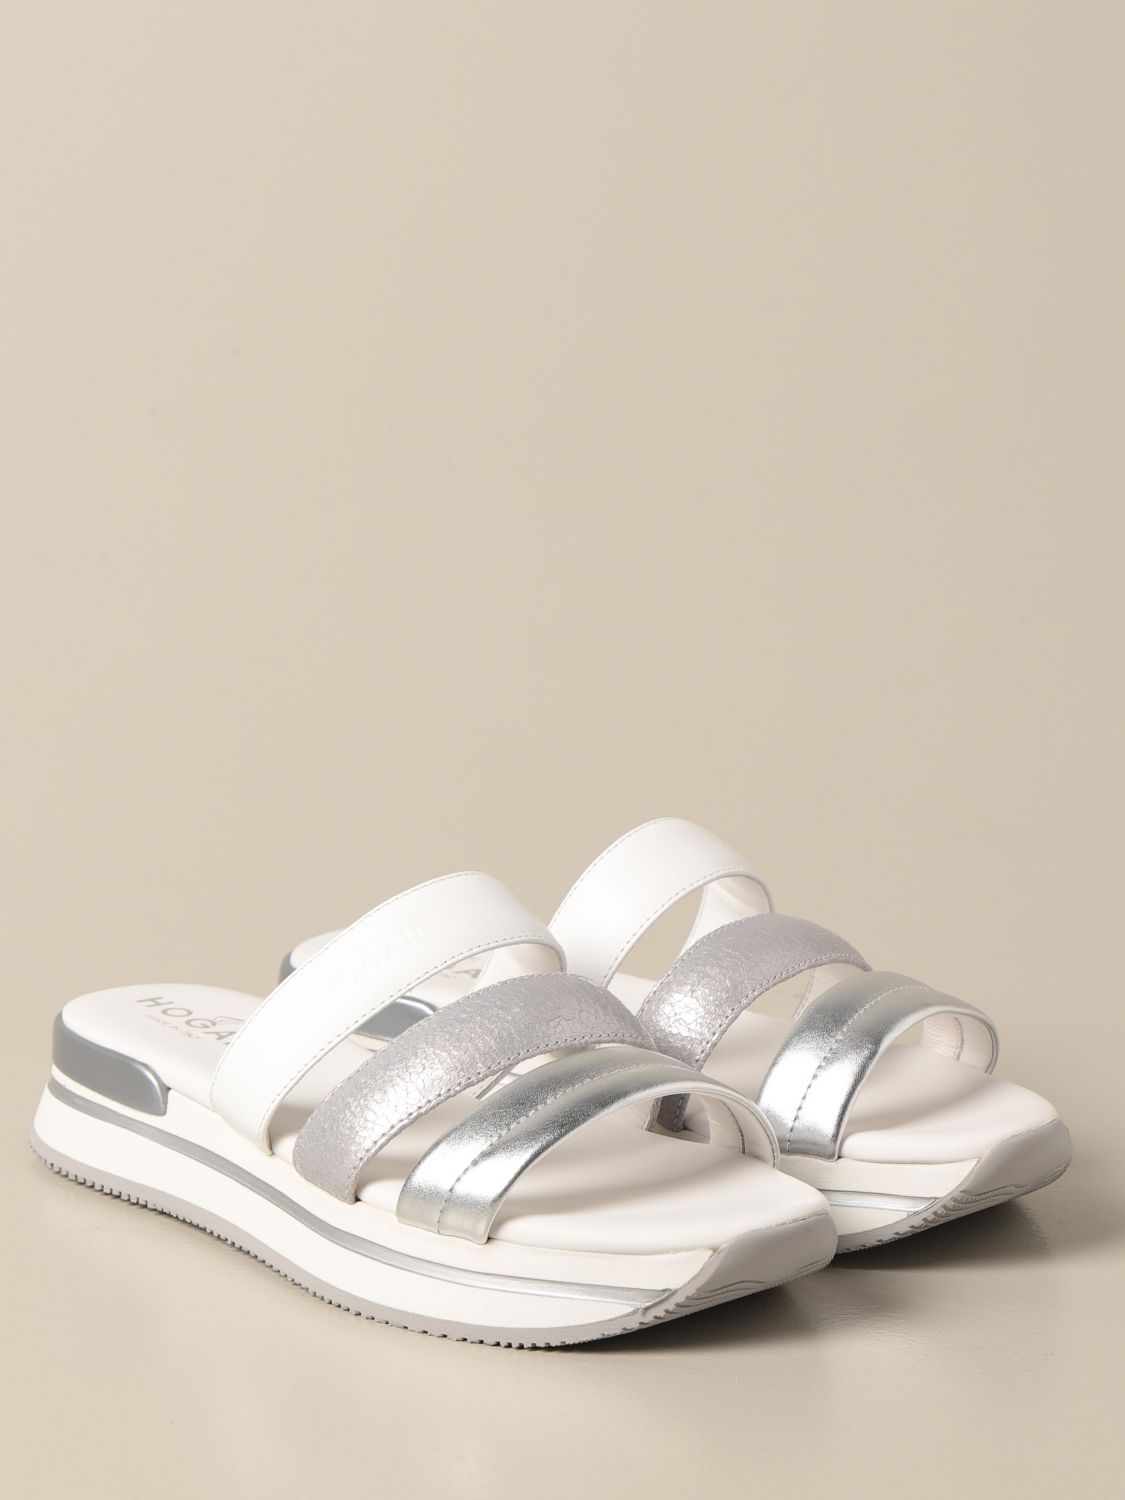 Sandales plates Hogan: Chaussures femme Hogan blanc 2